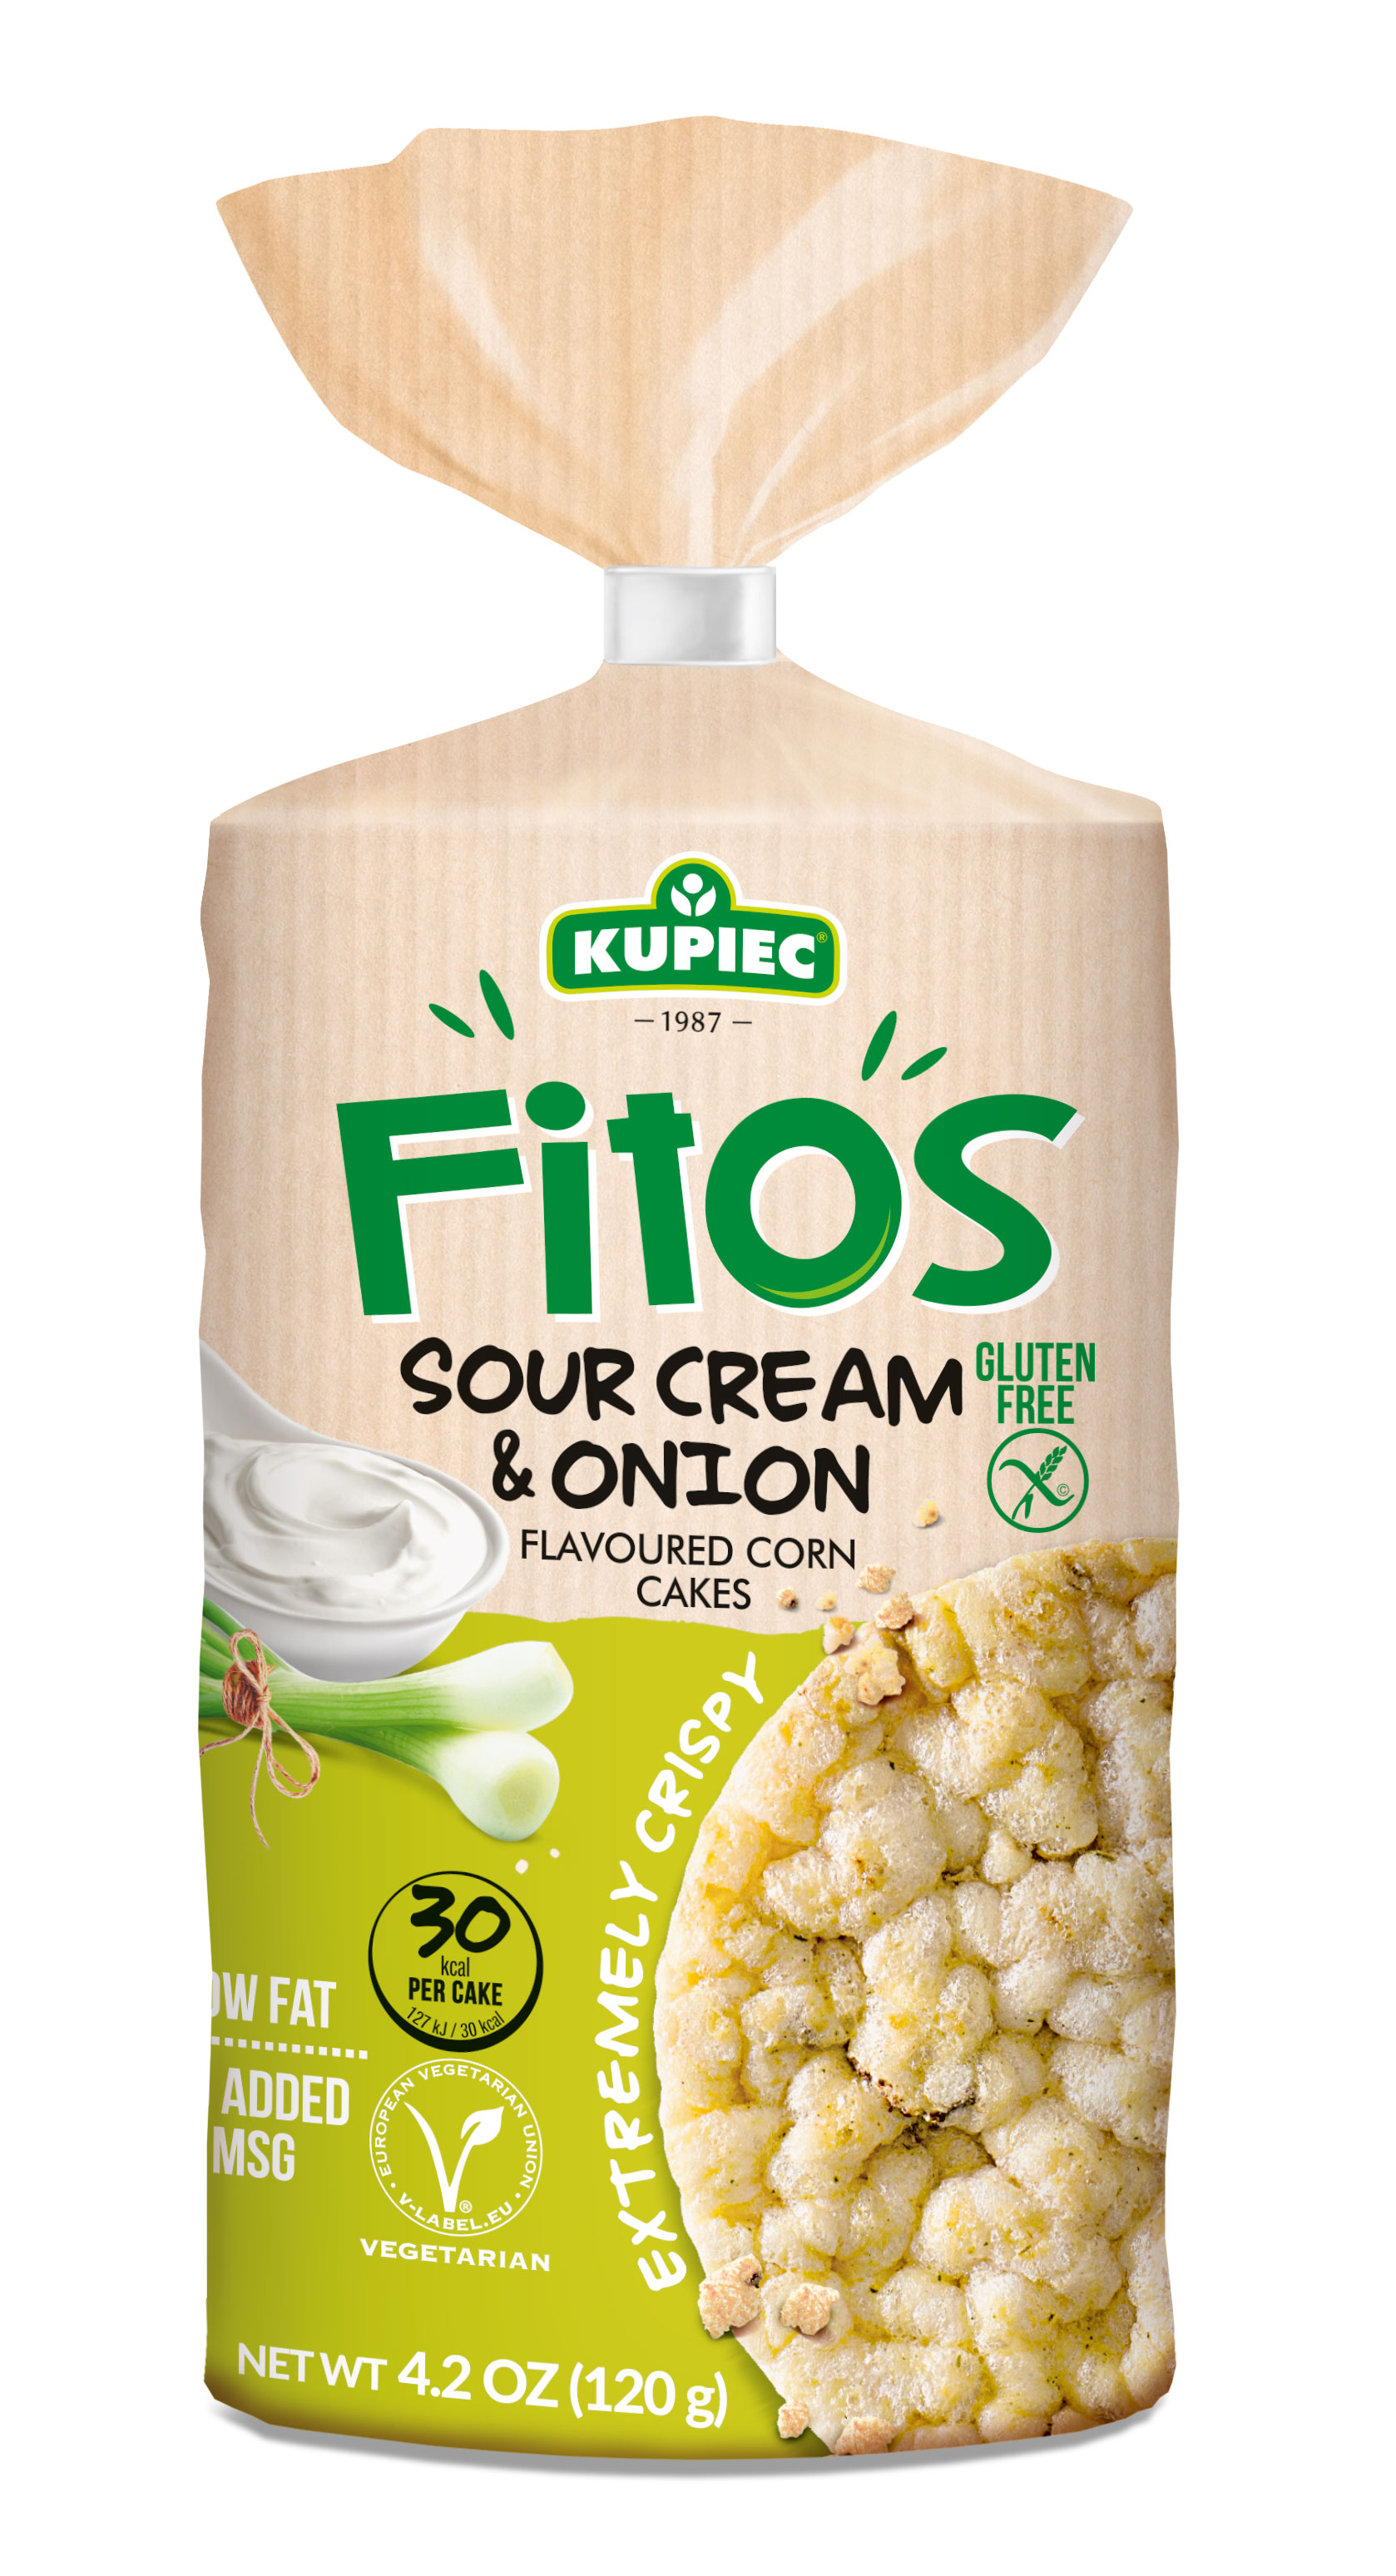 Fitos corn cakes sour cream & onion 120g